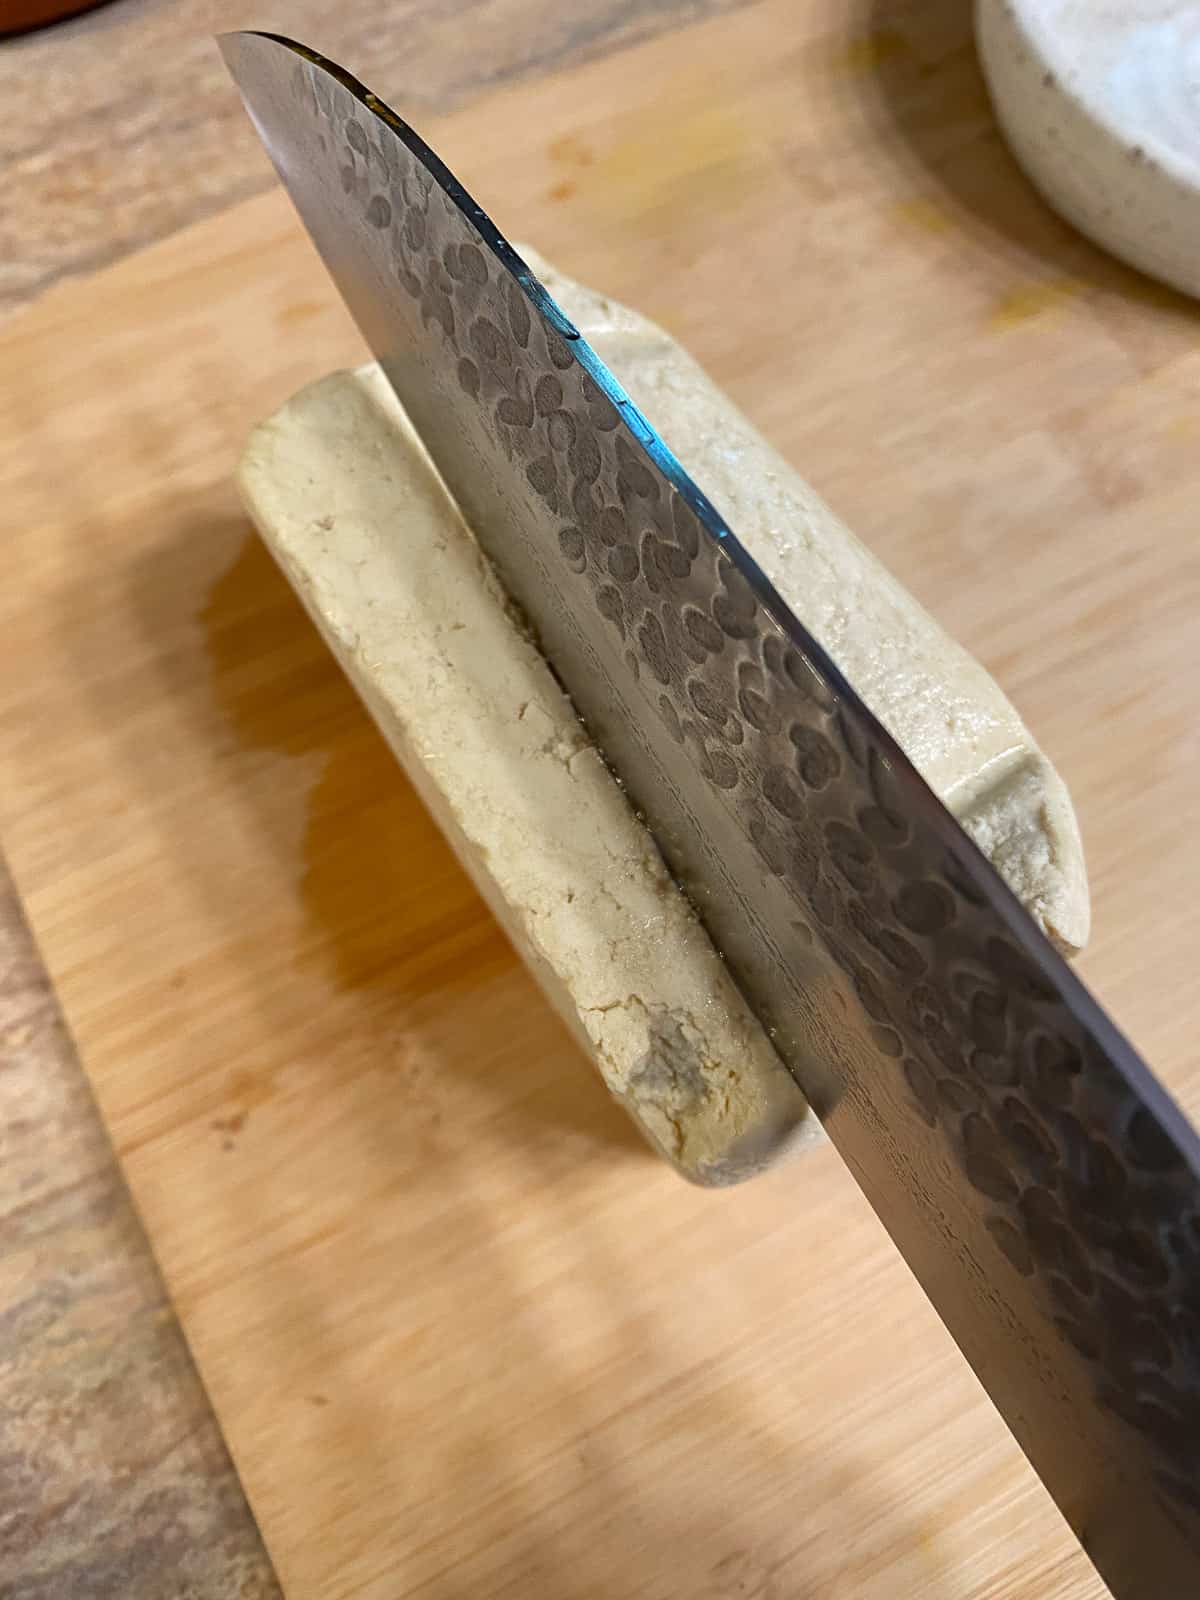 process of slicing block of tofu on cutting board